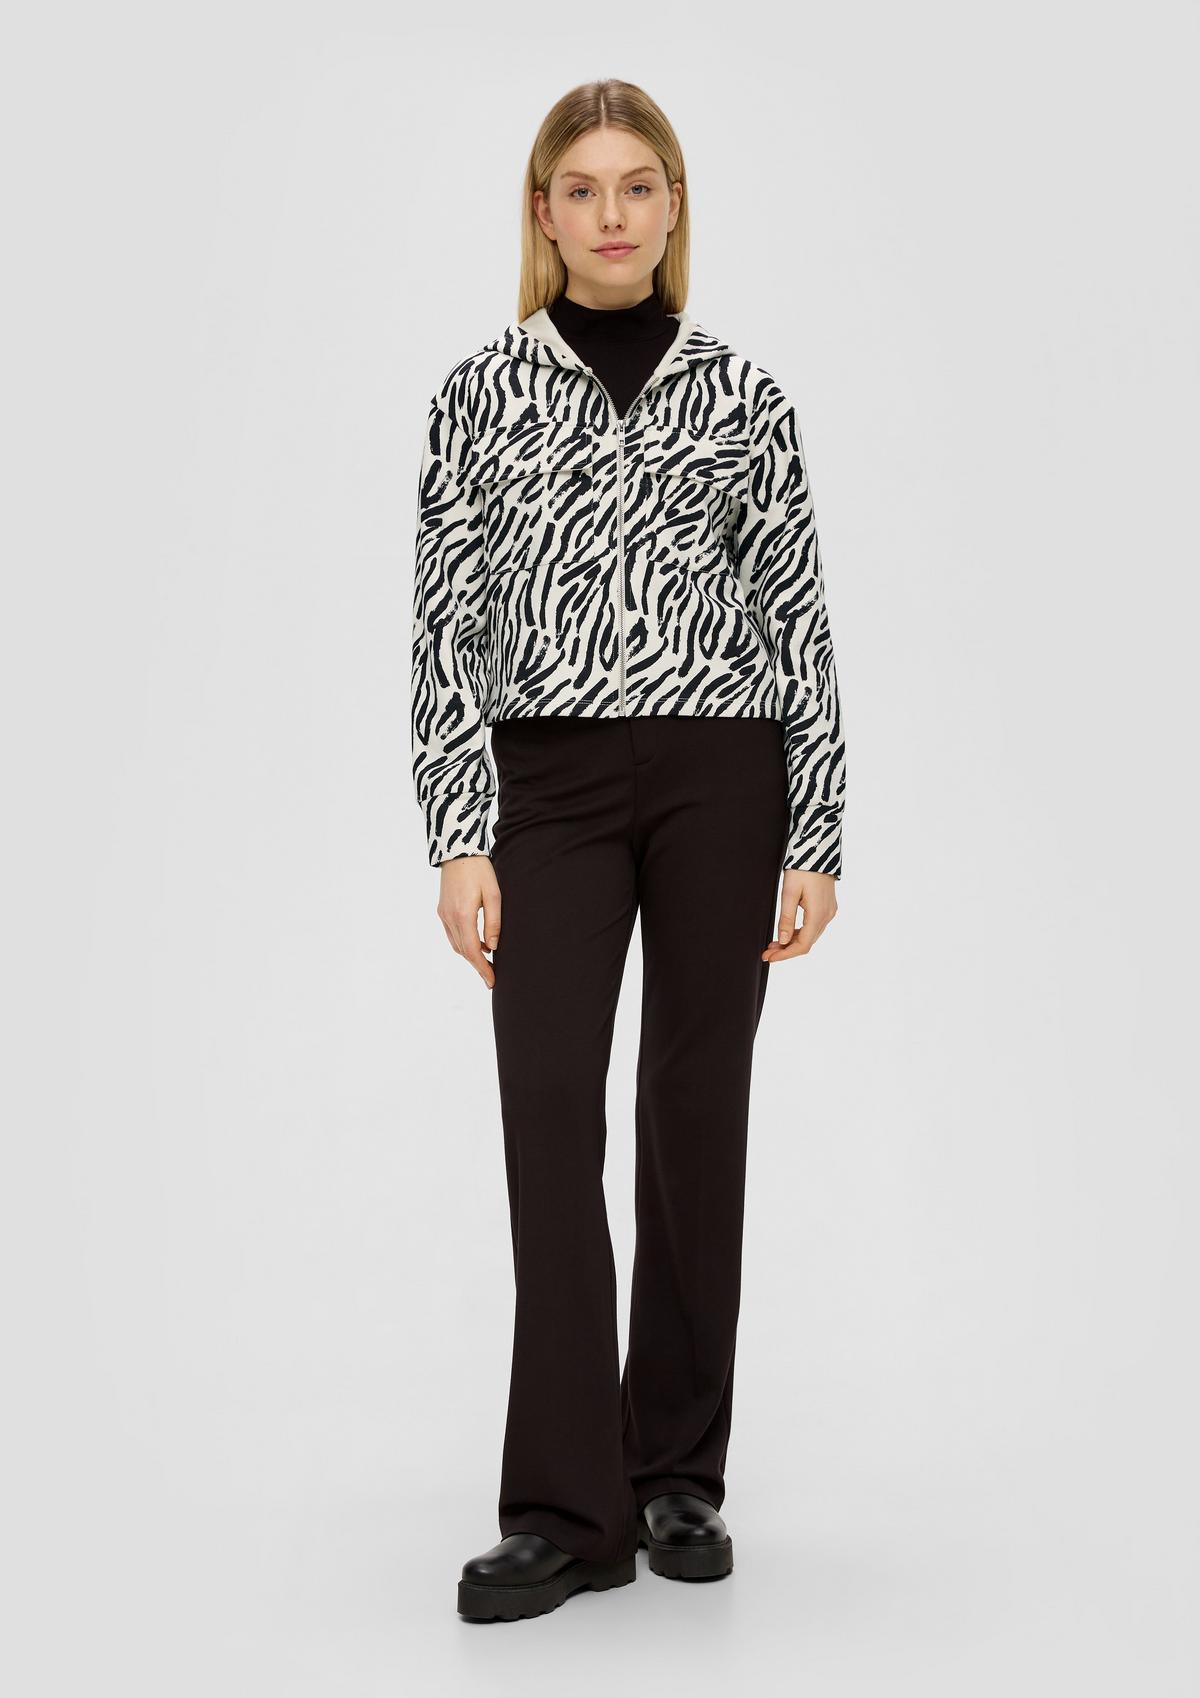 s.Oliver Sweatshirt jacket with a zebra pattern